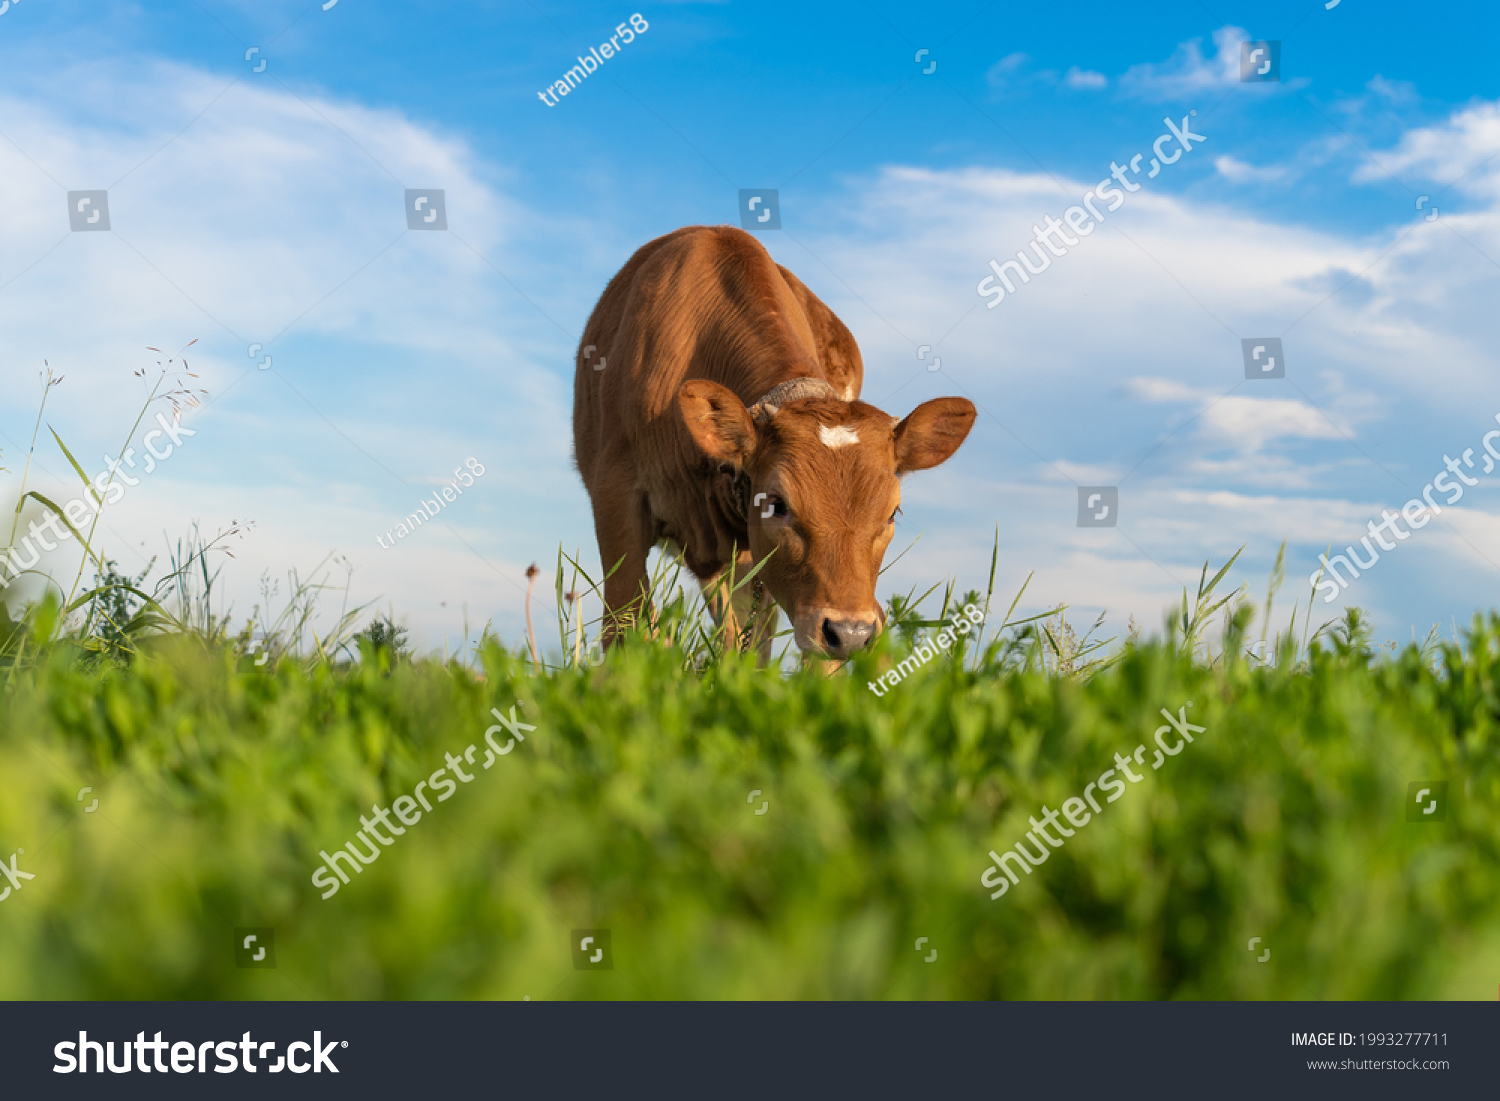 brown calf eating green grass, under the blue sky #1993277711